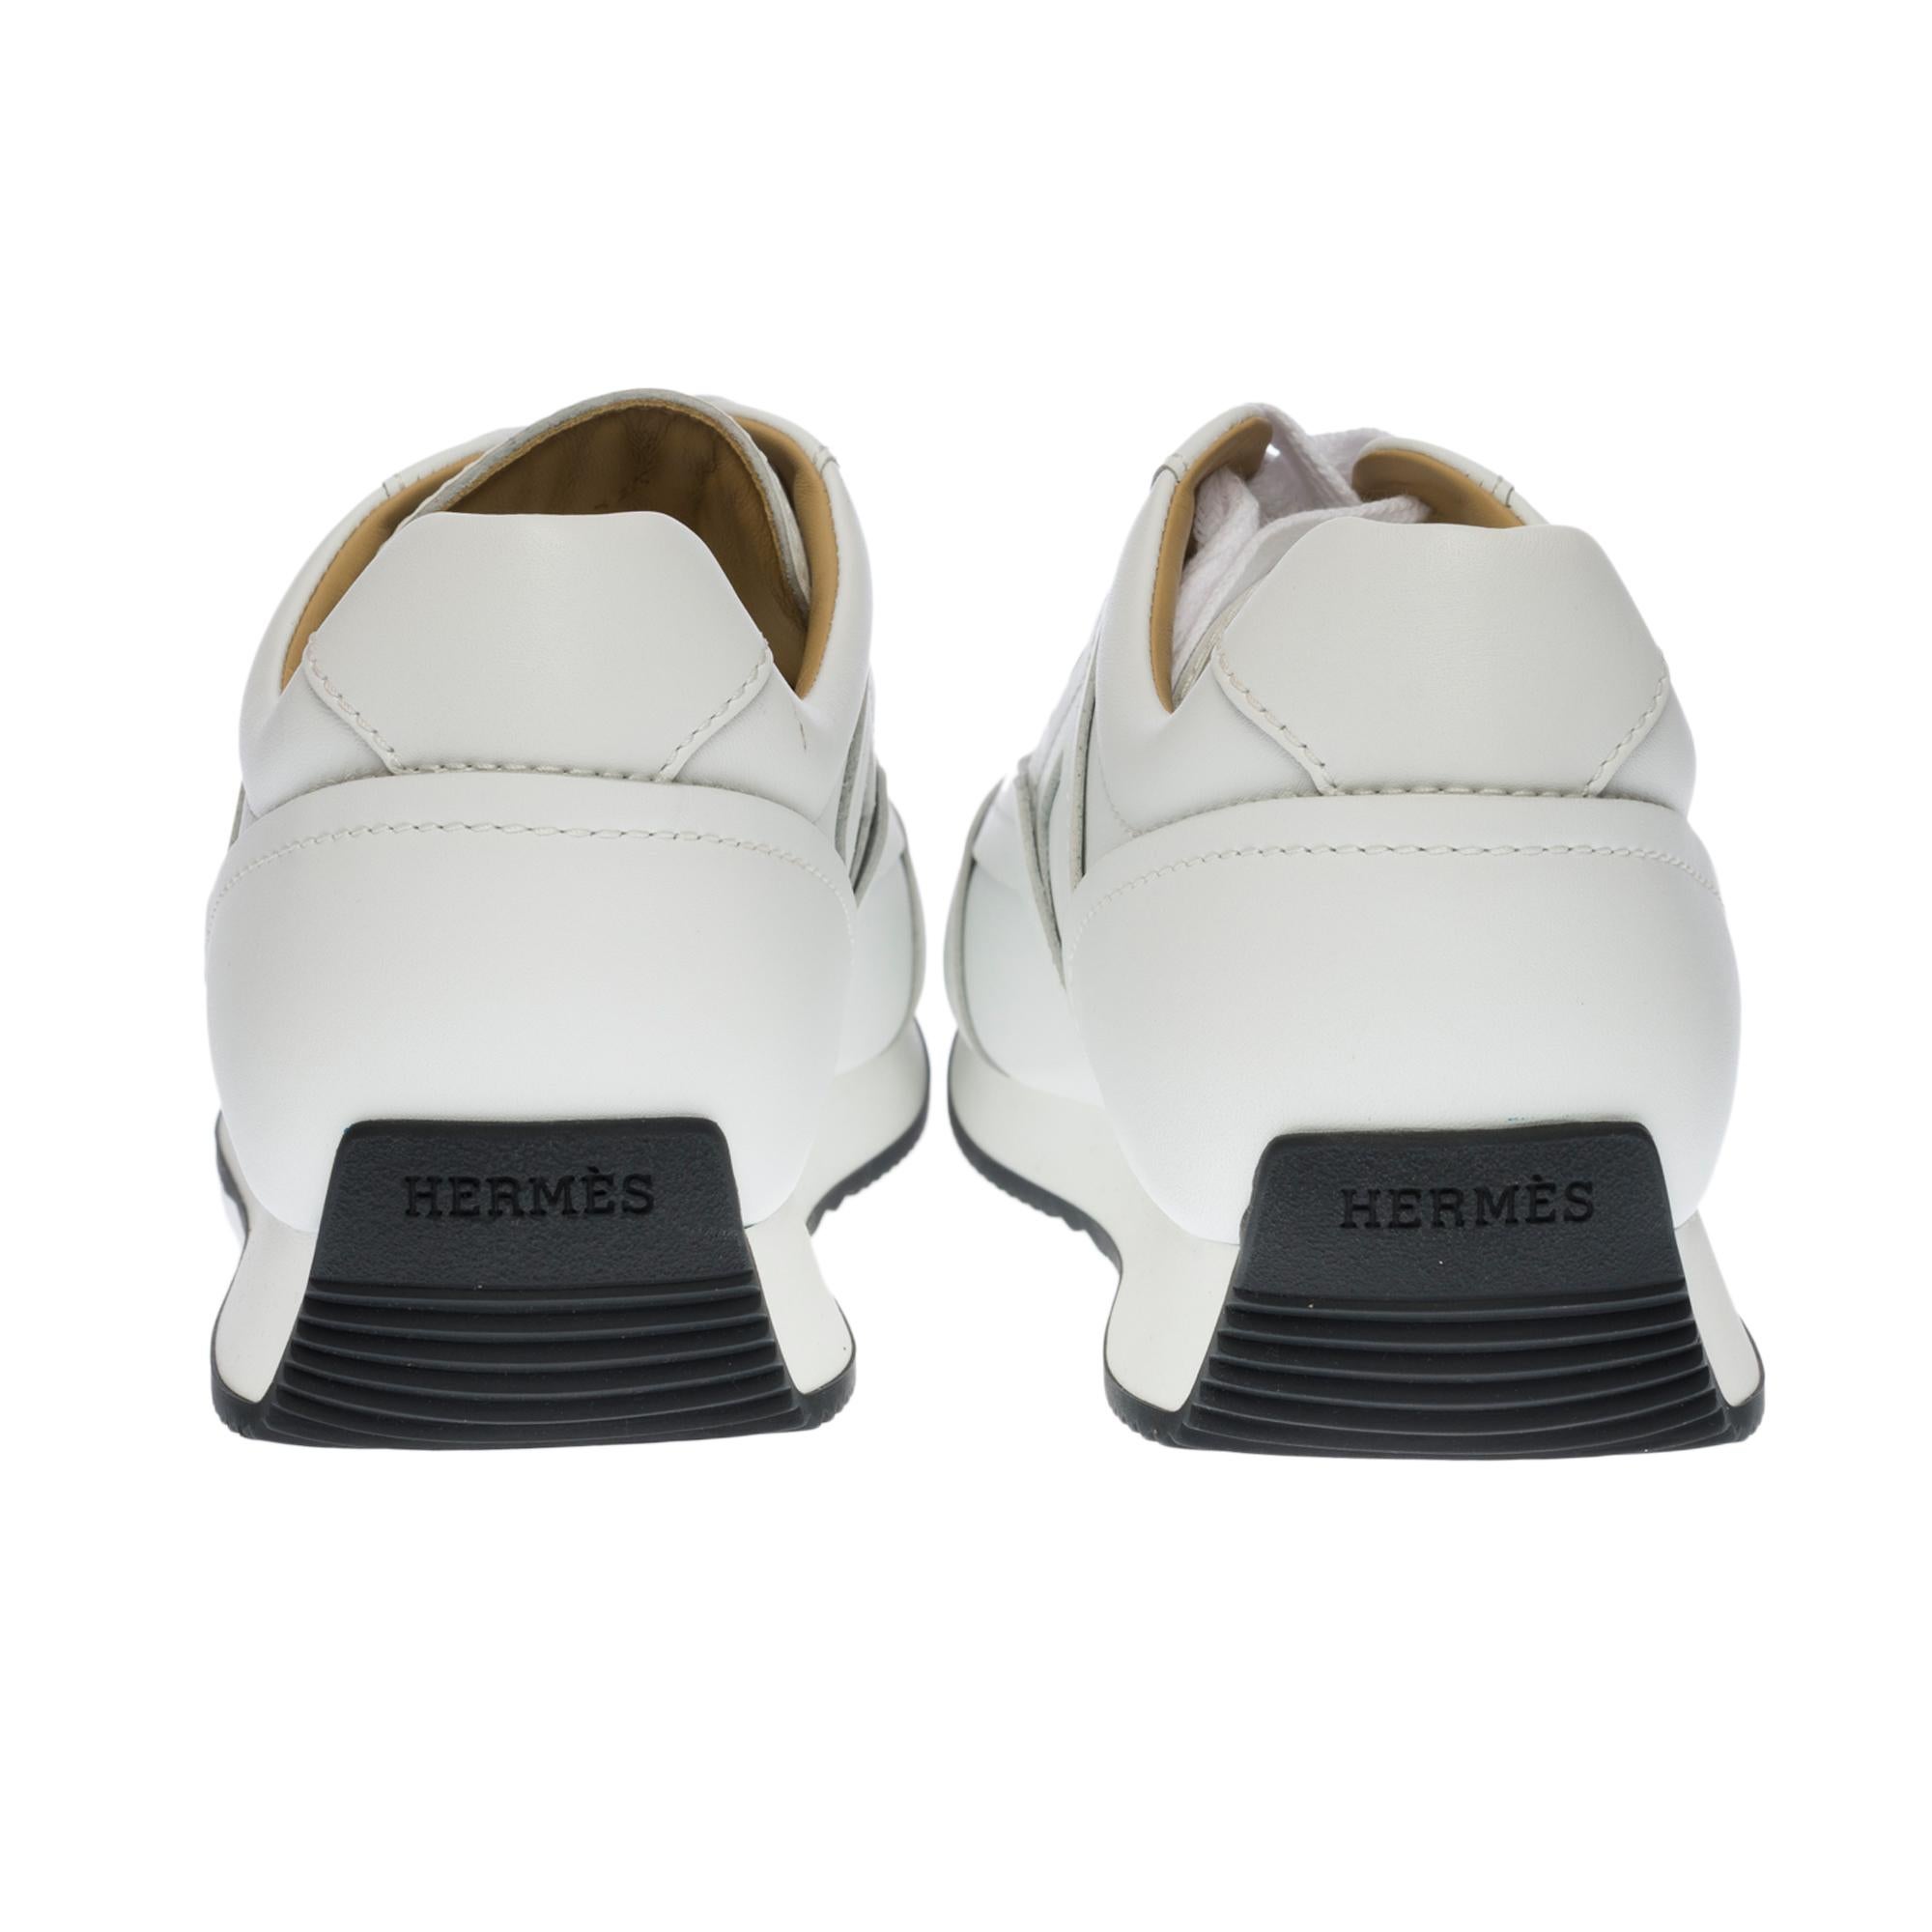 New - Hermès Chris Men's Sneakers in white calf - Size 43.5 1